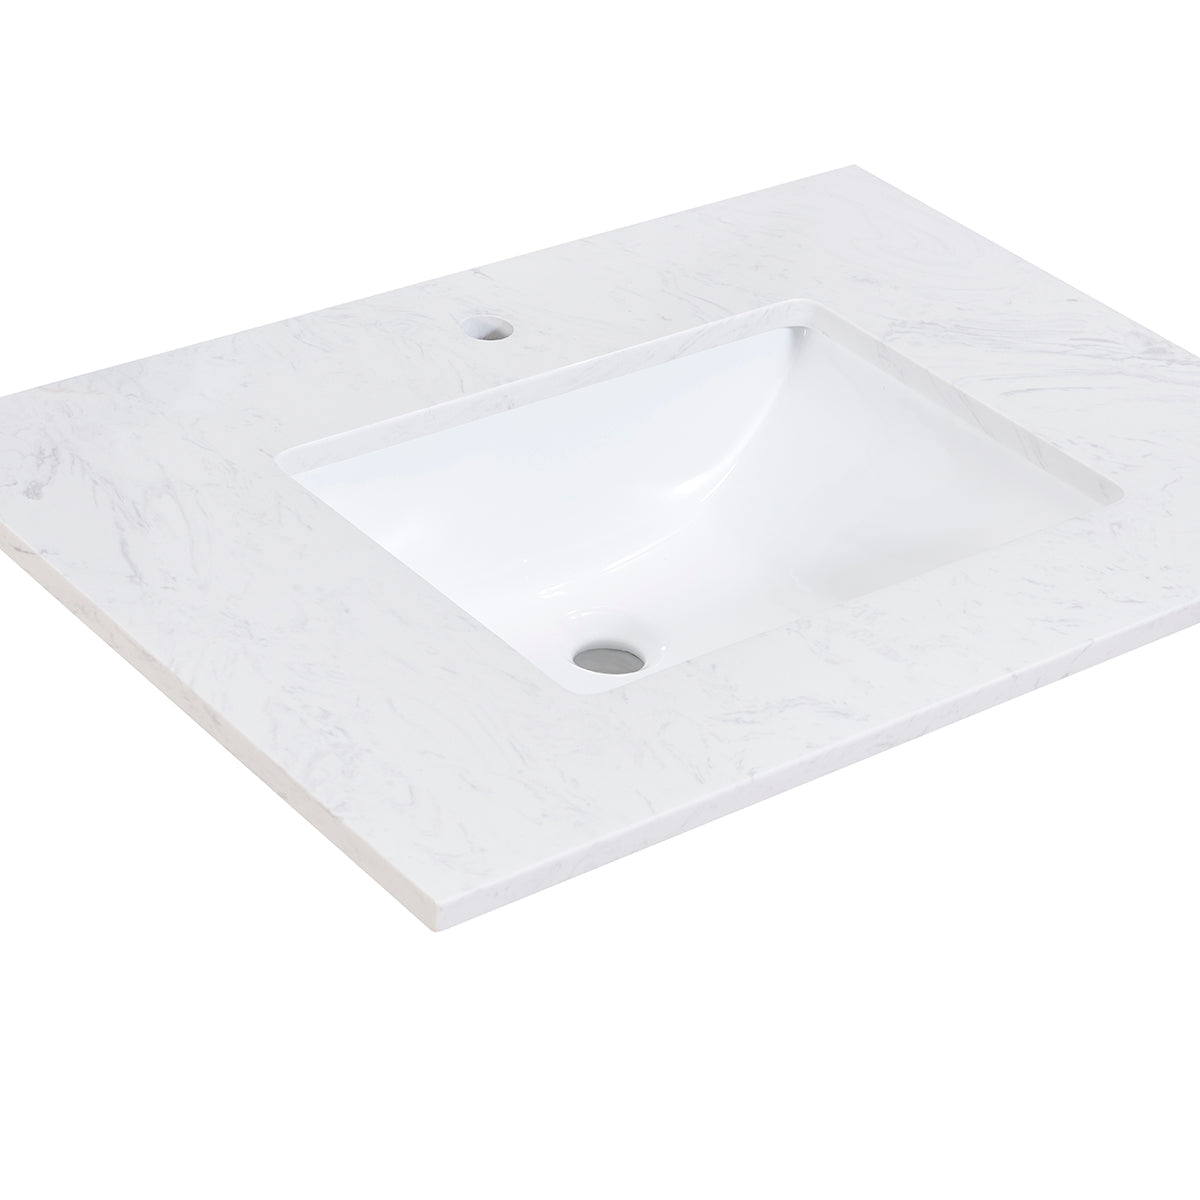 Salerno Single Sink Bathroom Vanity Countertop in Aosta White – Altair ...